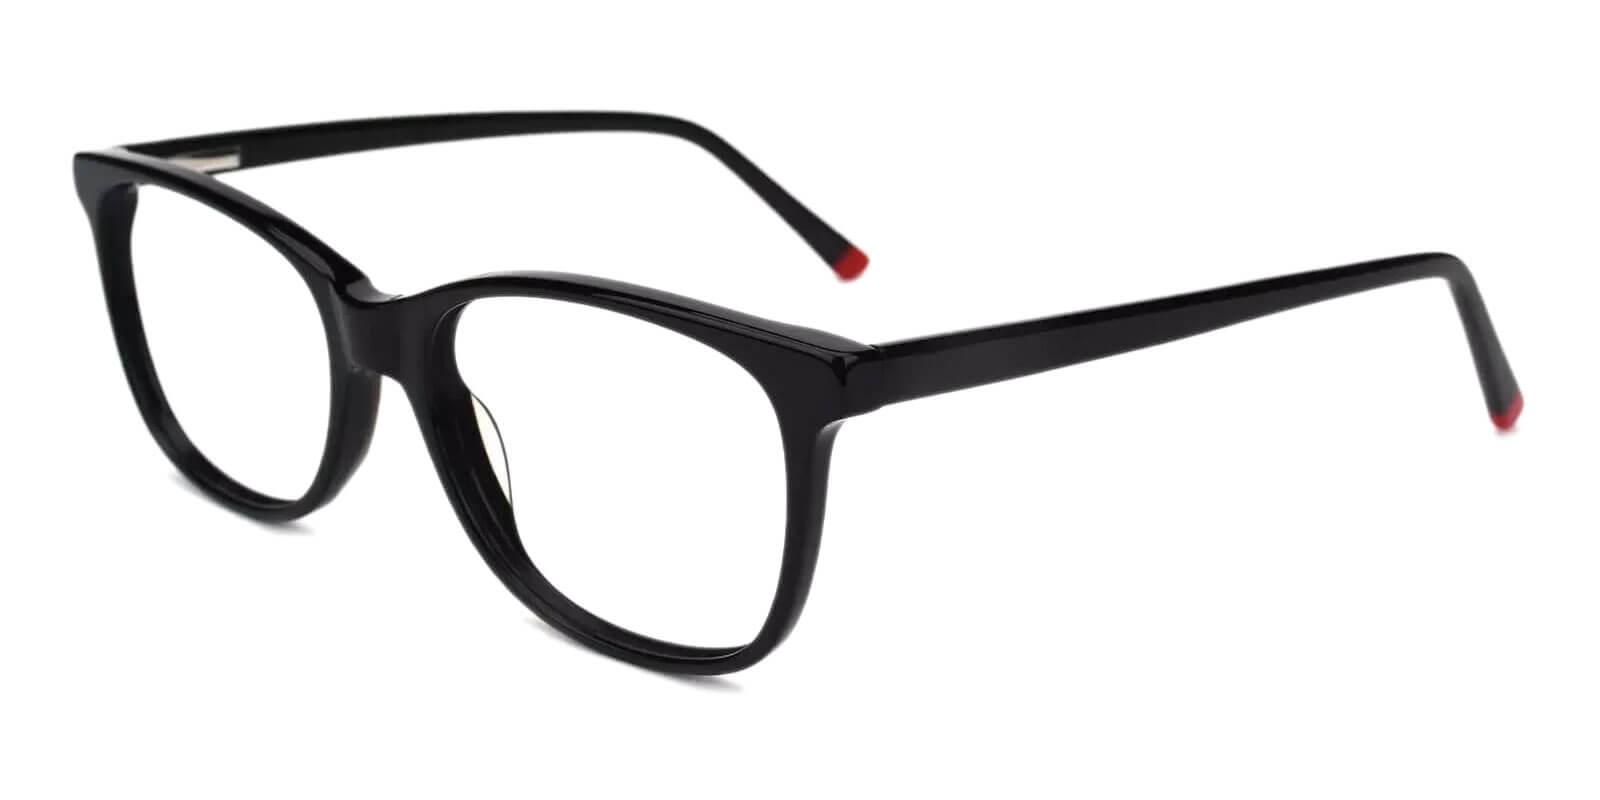 Hibbard Black Acetate Eyeglasses , SpringHinges , UniversalBridgeFit Frames from ABBE Glasses